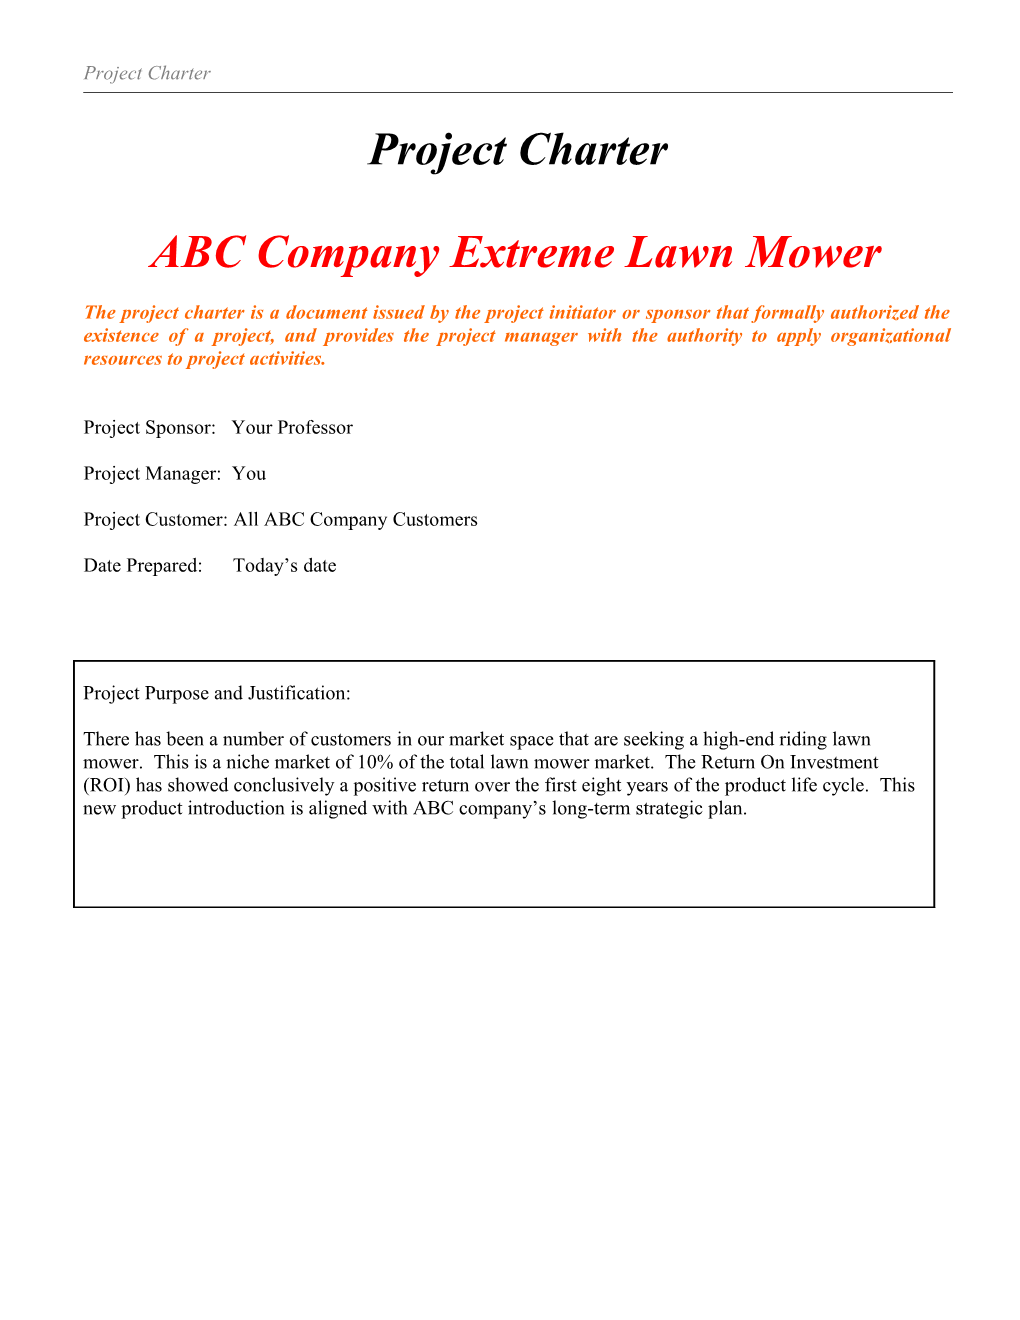 ABC Company Extreme Lawn Mower